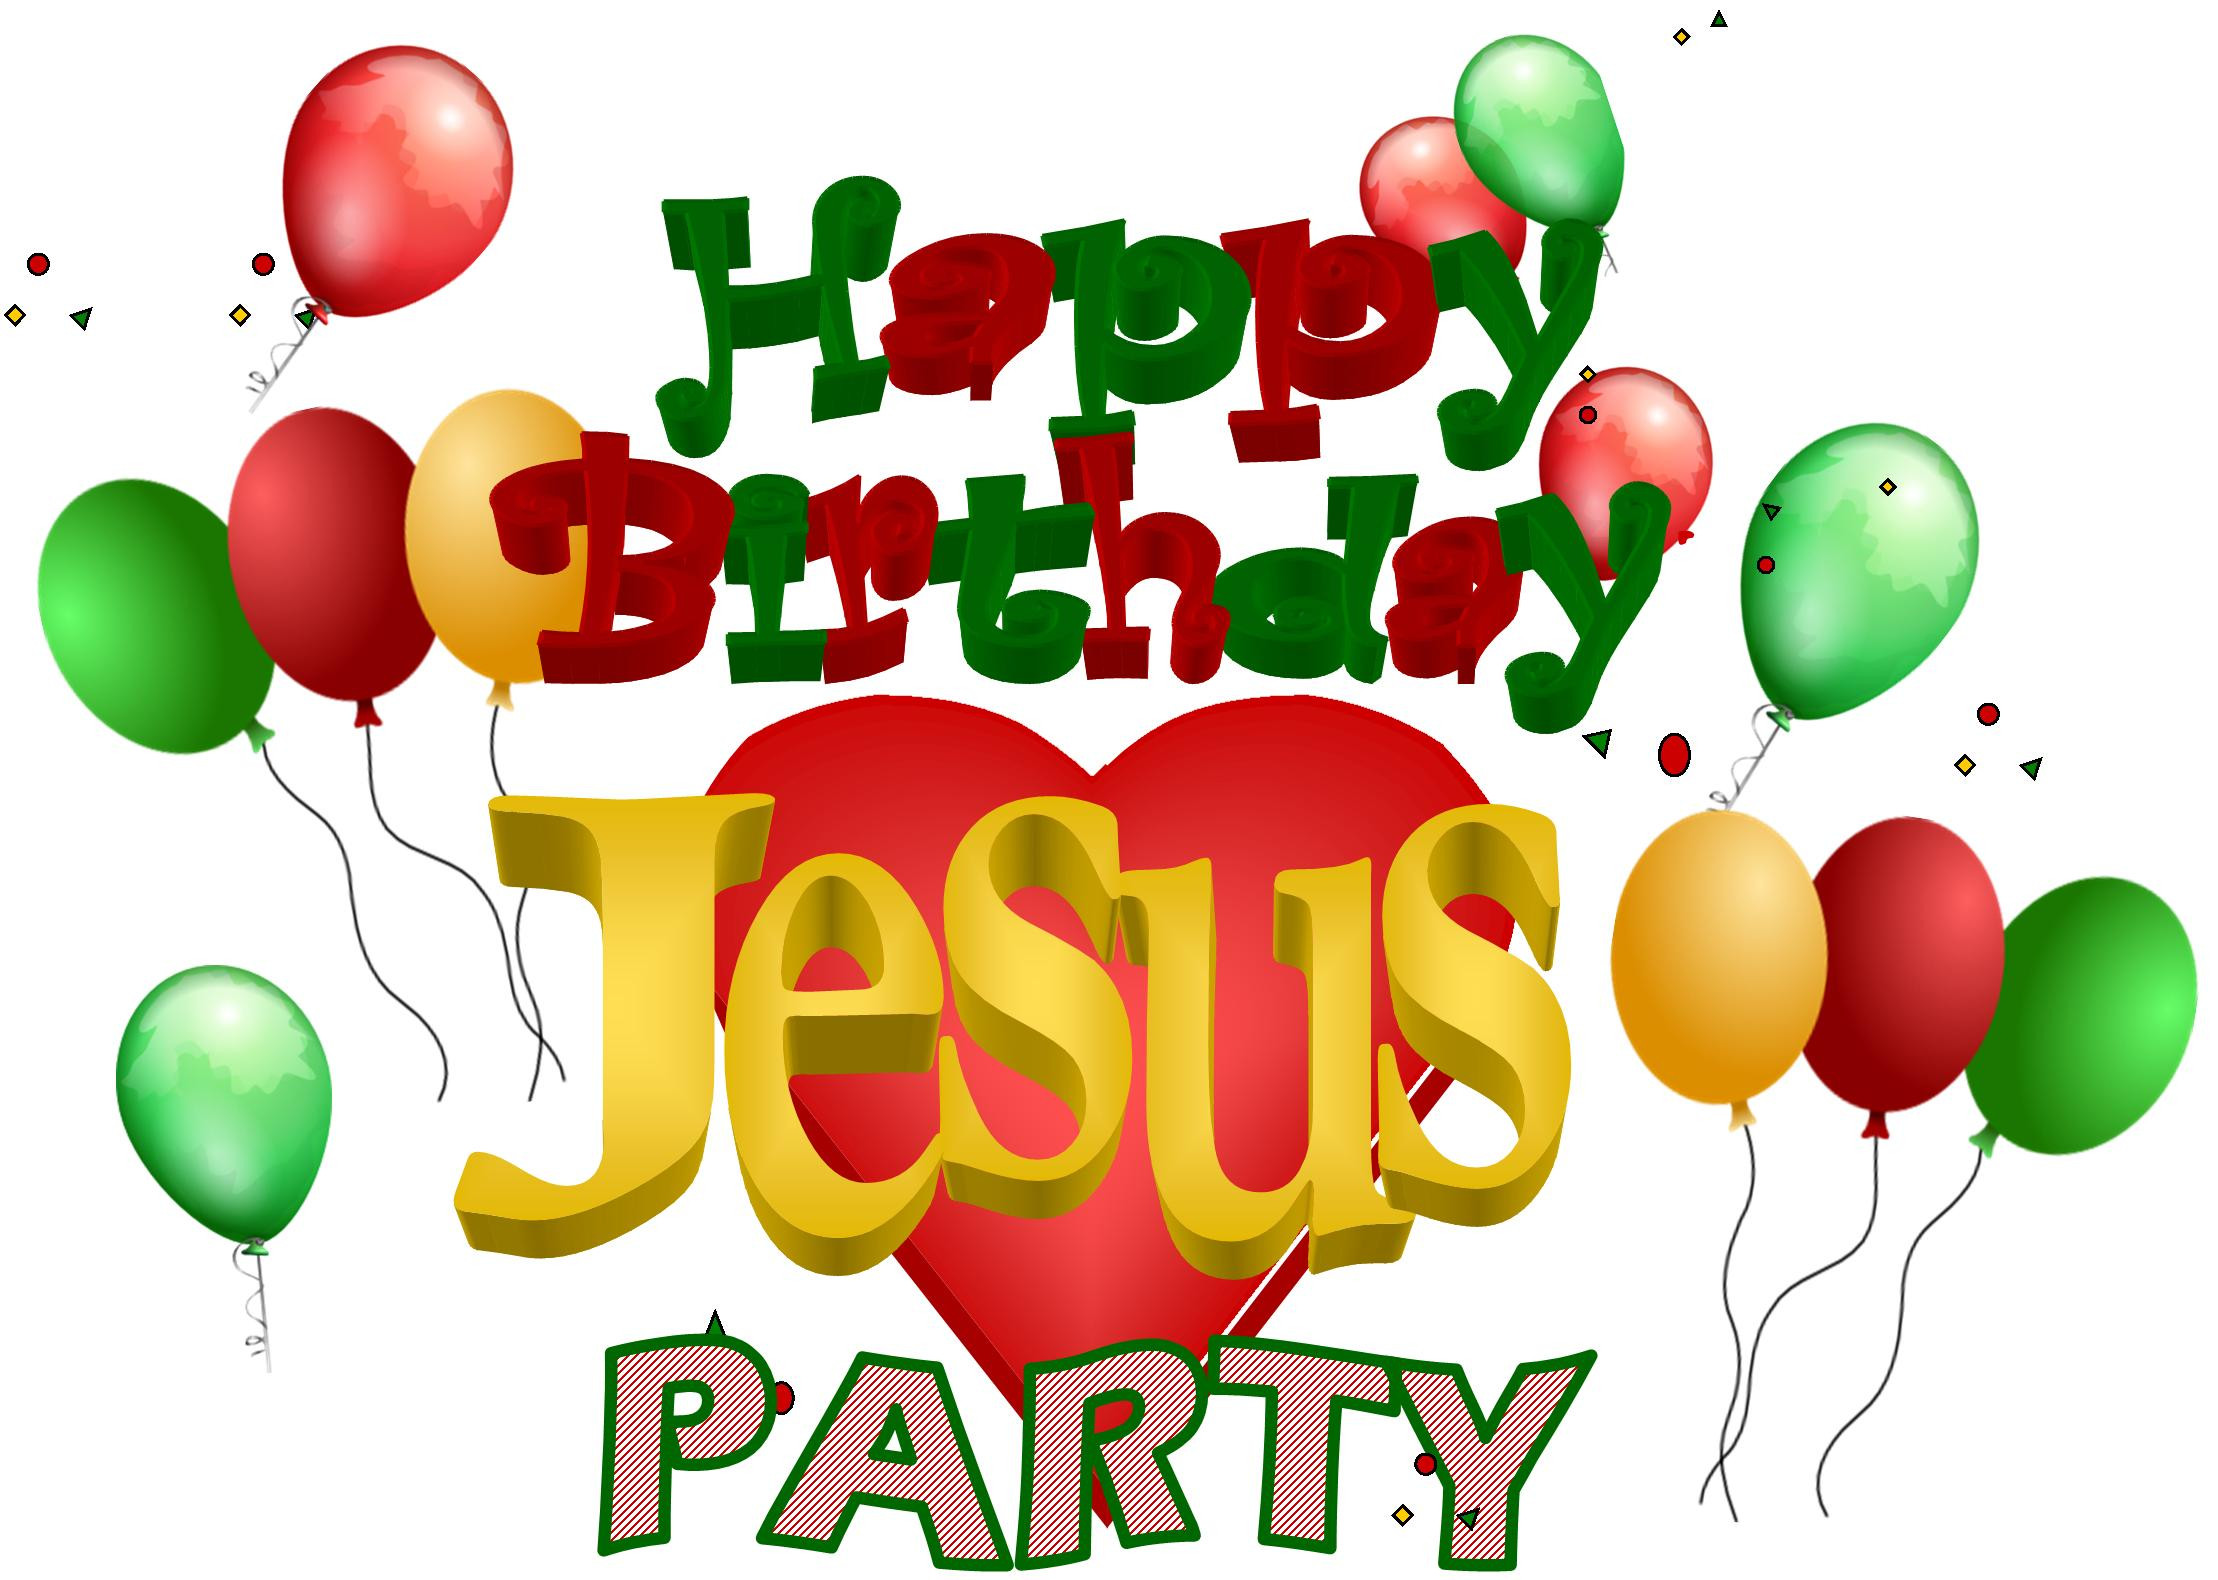 Happy Birthday Jesus Party
 Happy Birthday Jesus Party CCLBKids